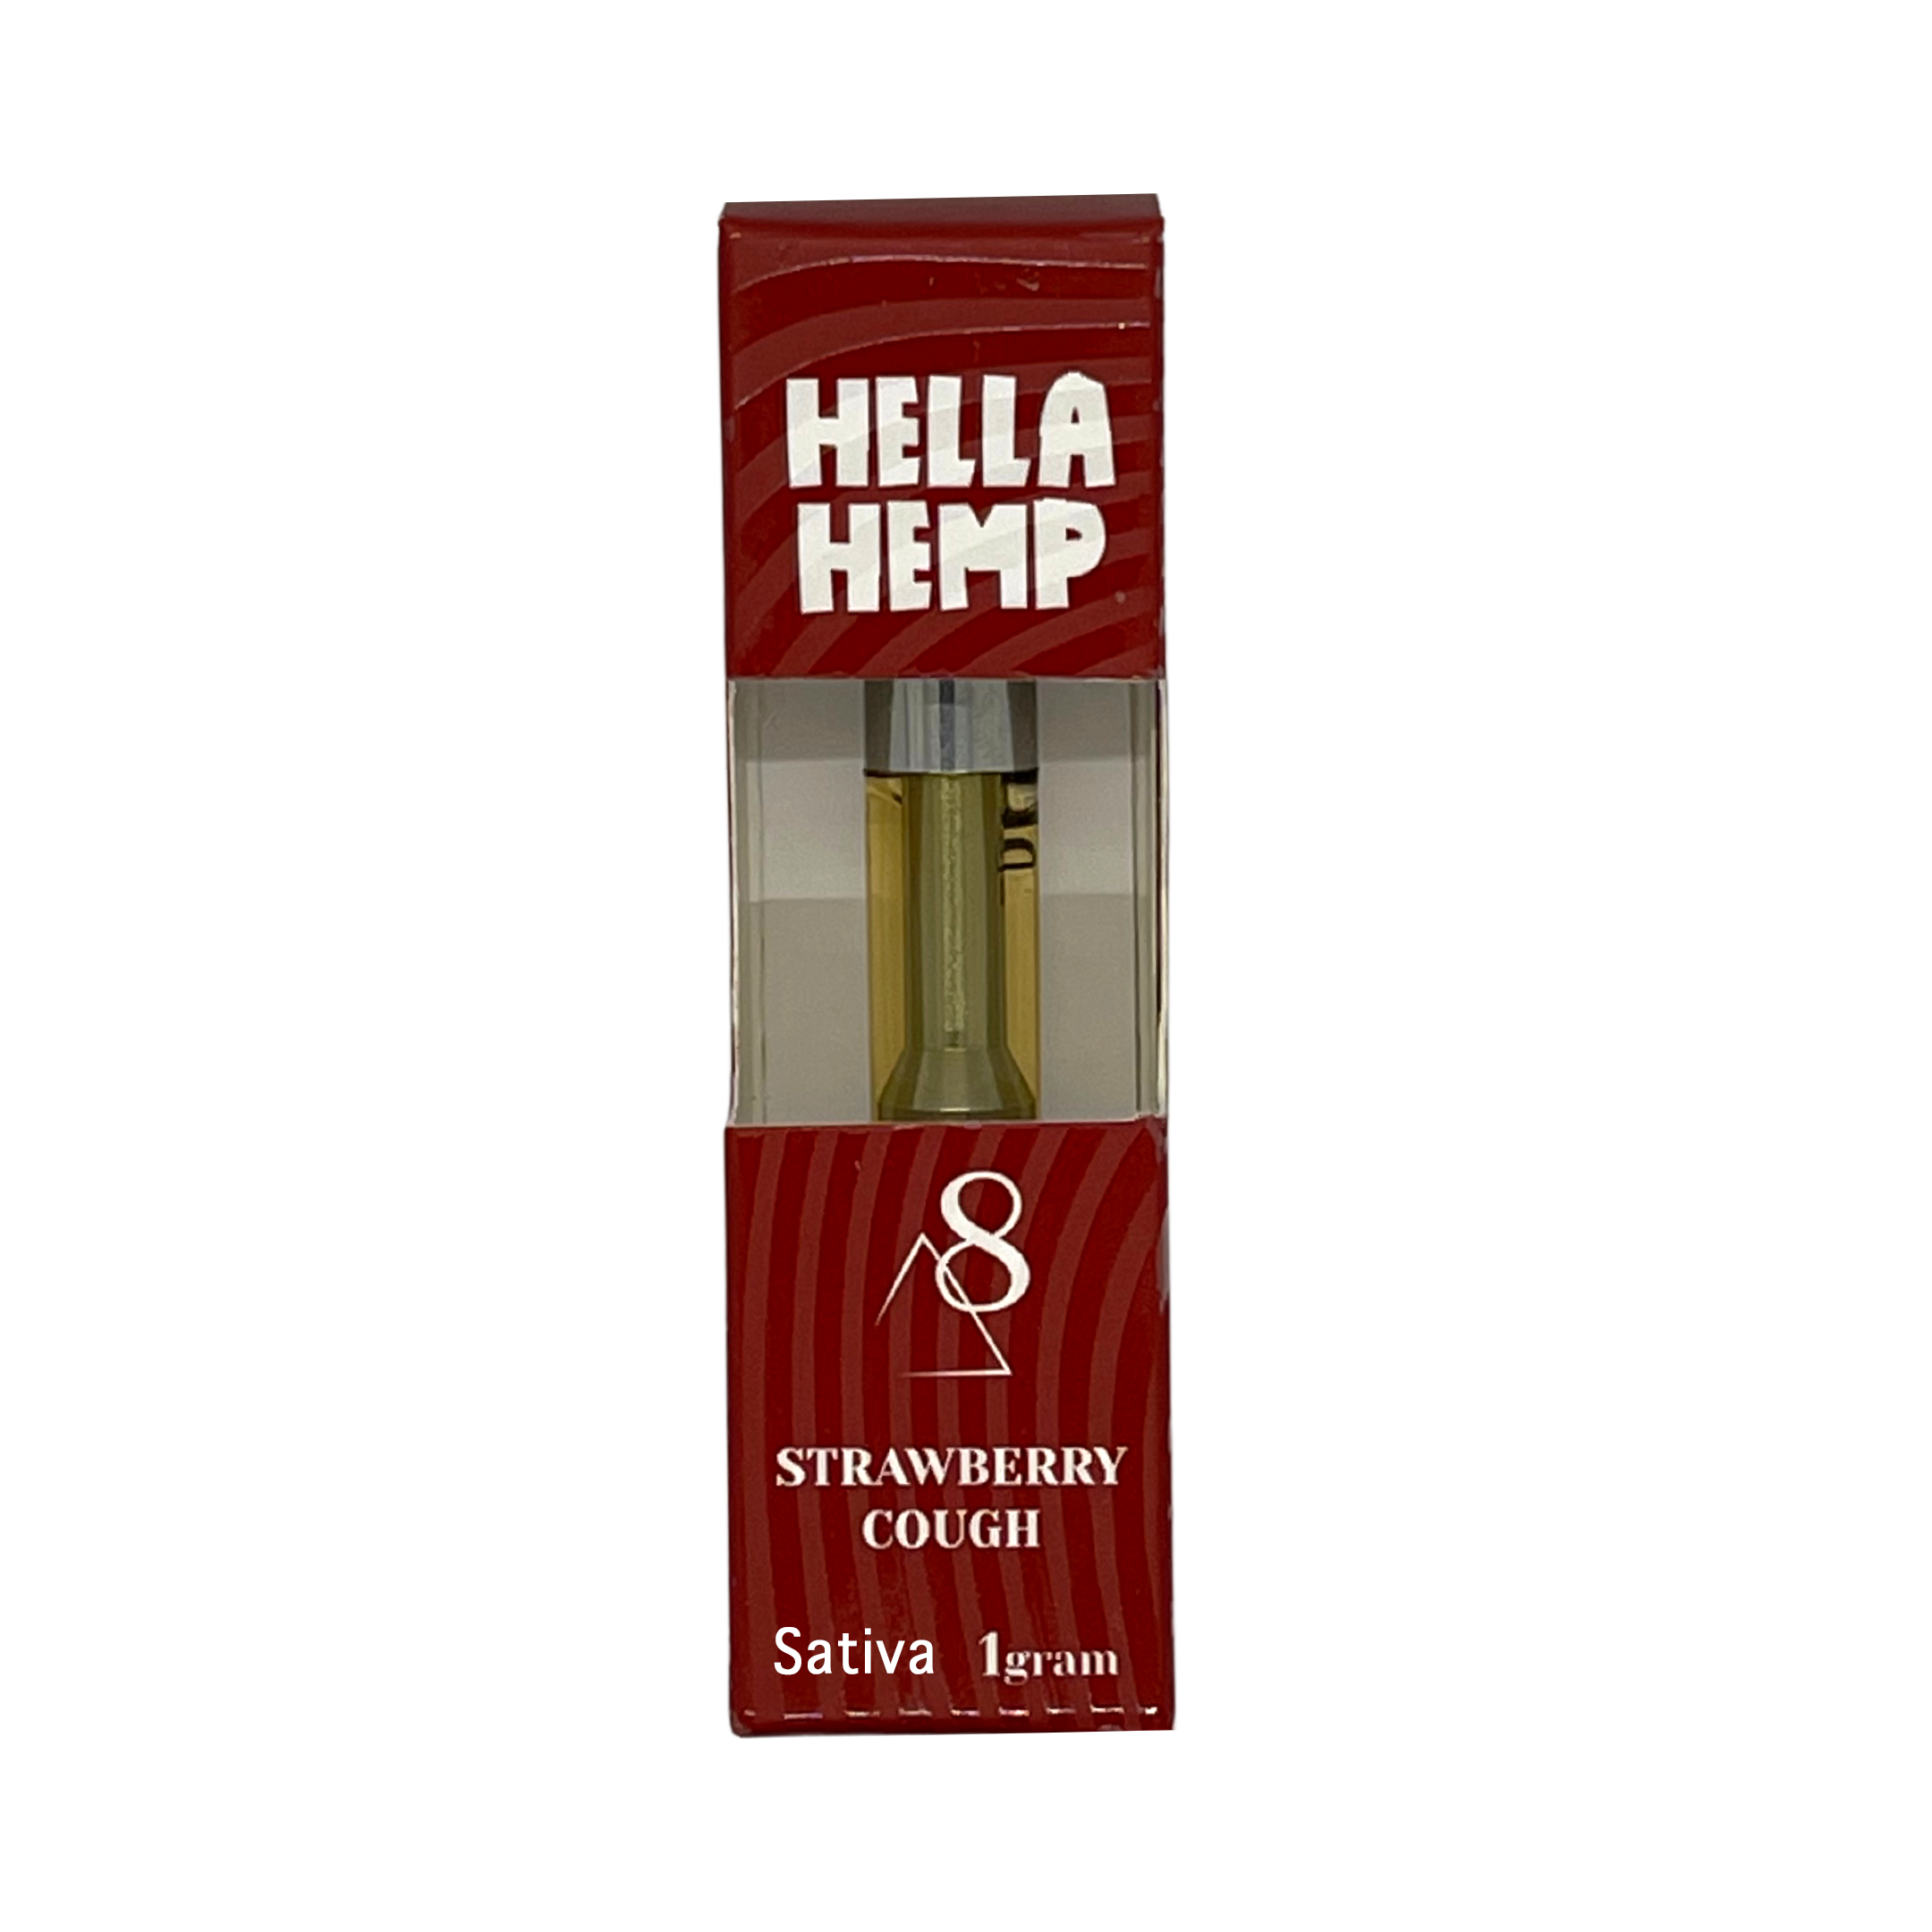 HELLA HEMP DELTA 8 CARTRIDGE 960MG